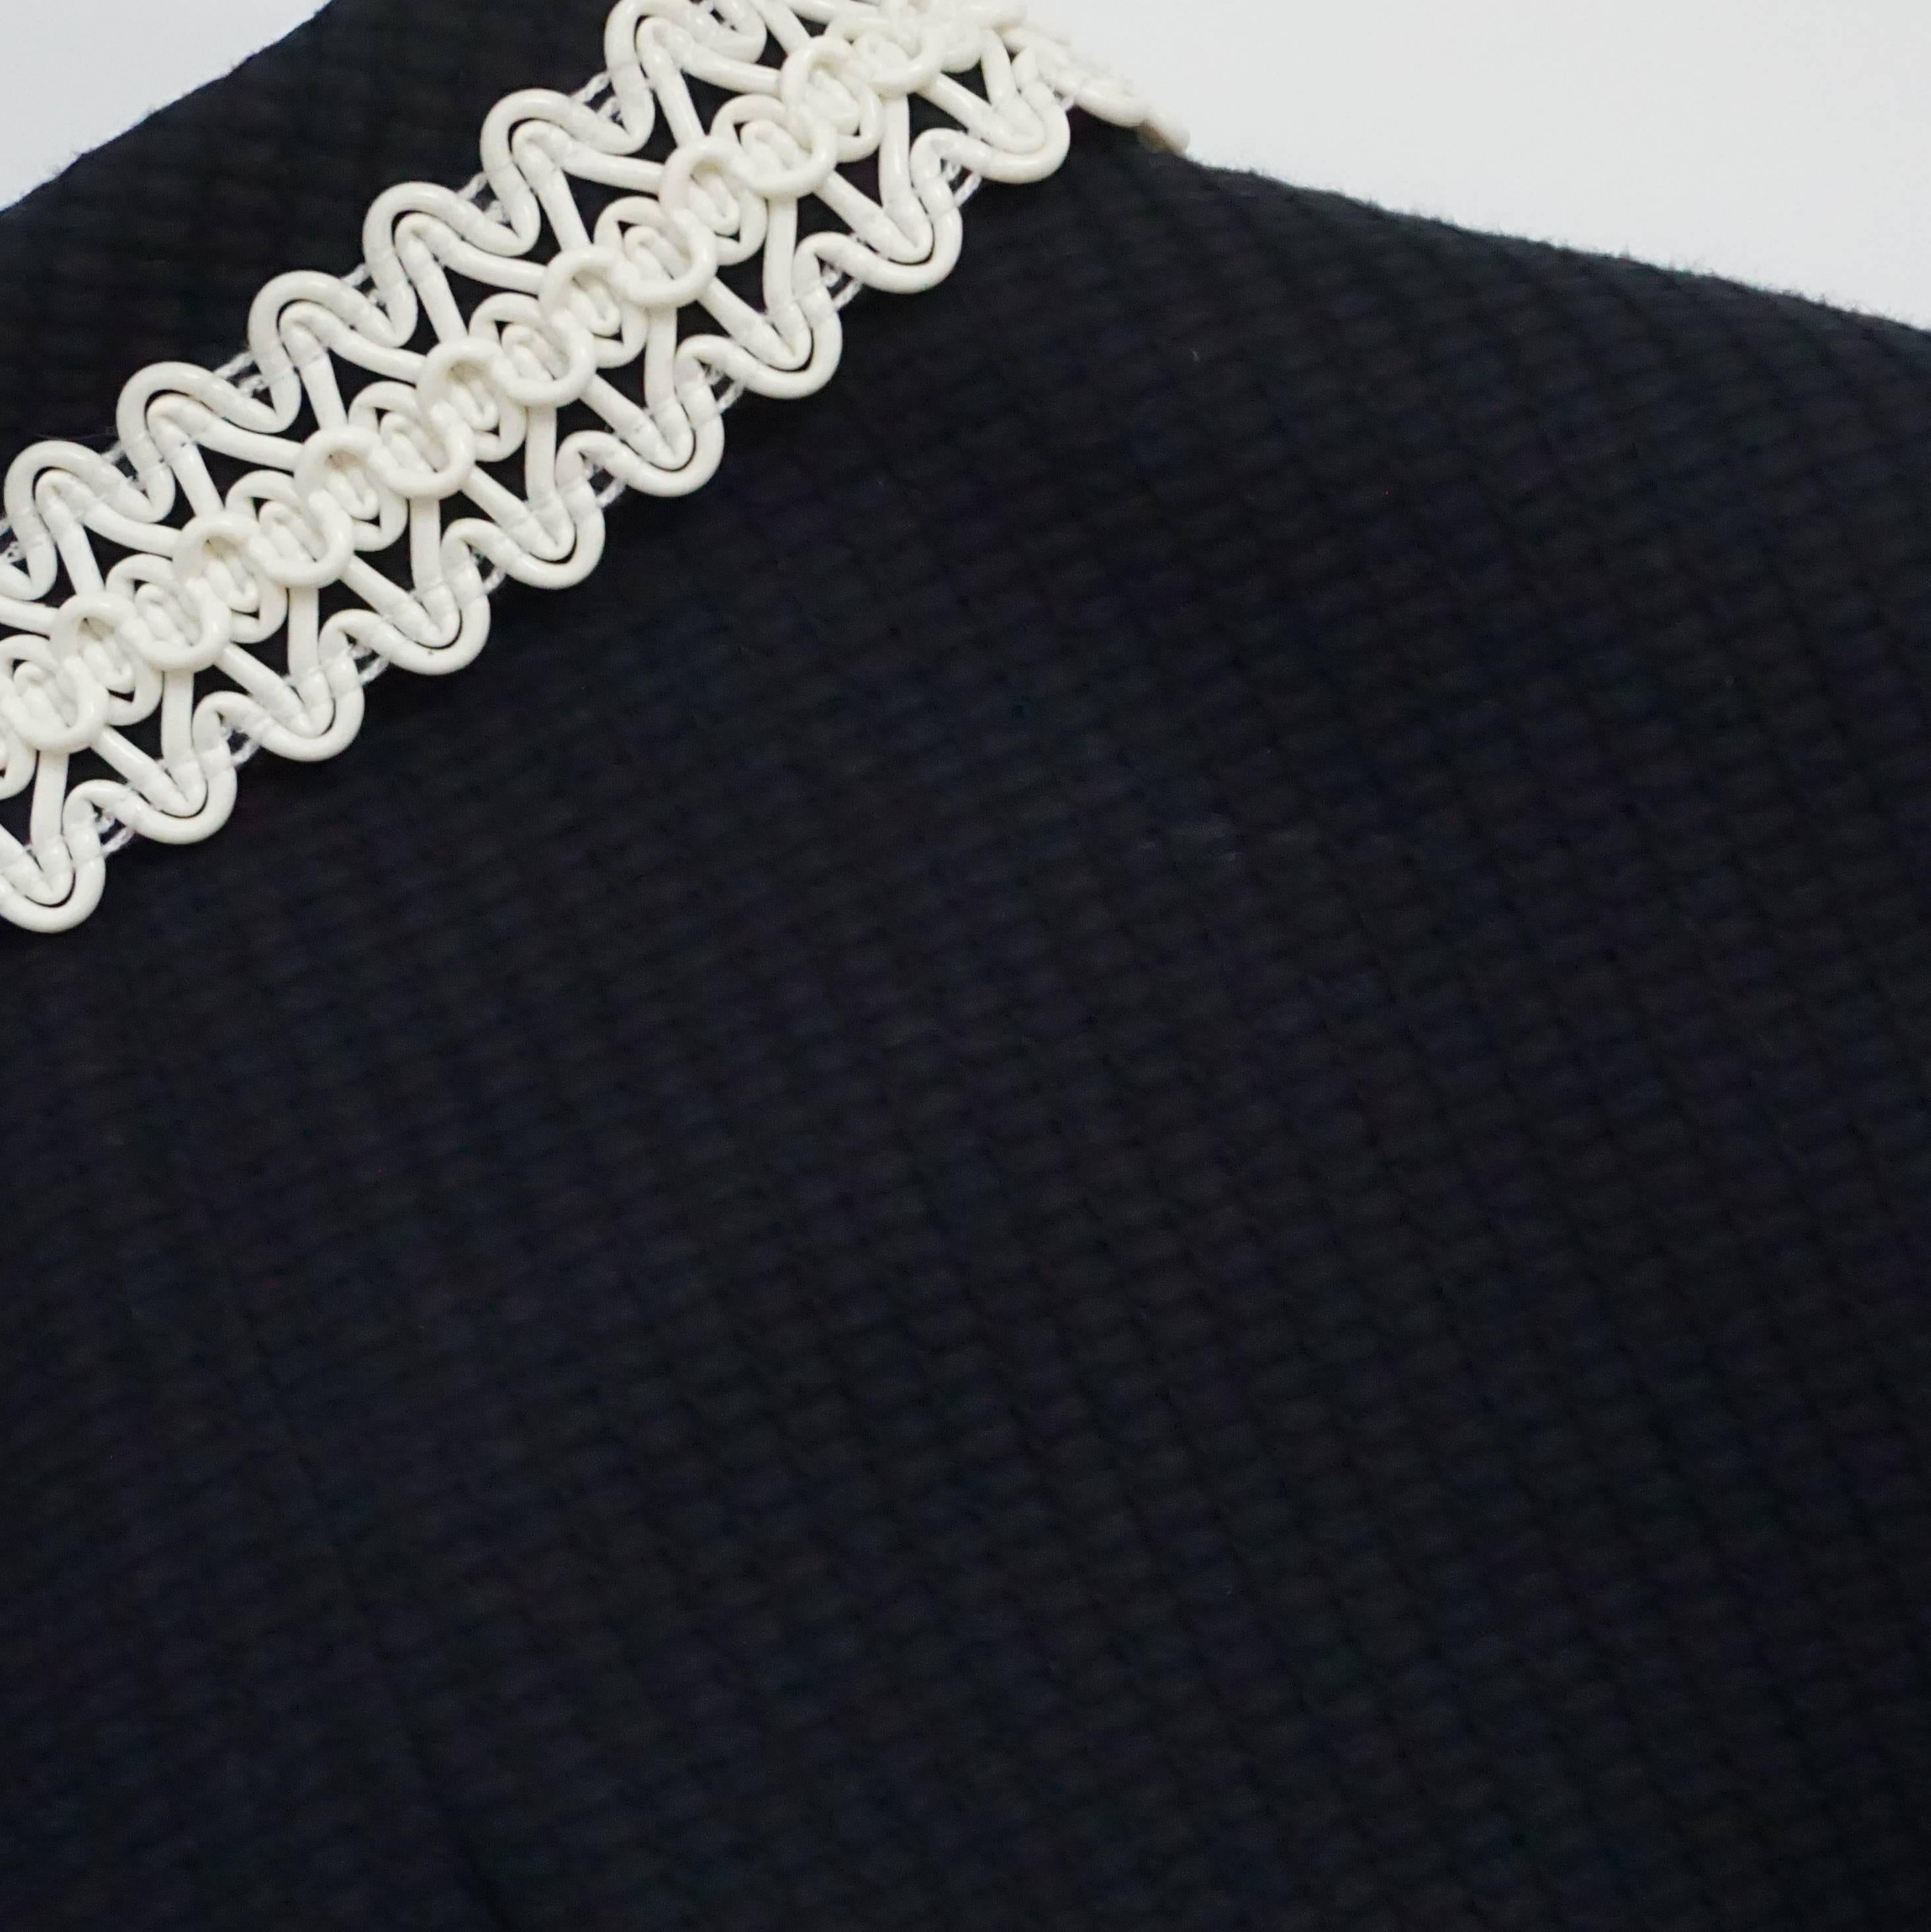 Chanel Navy Textured Cotton Skirt Suit with PVC Lace Trim Detail-42-94P 3